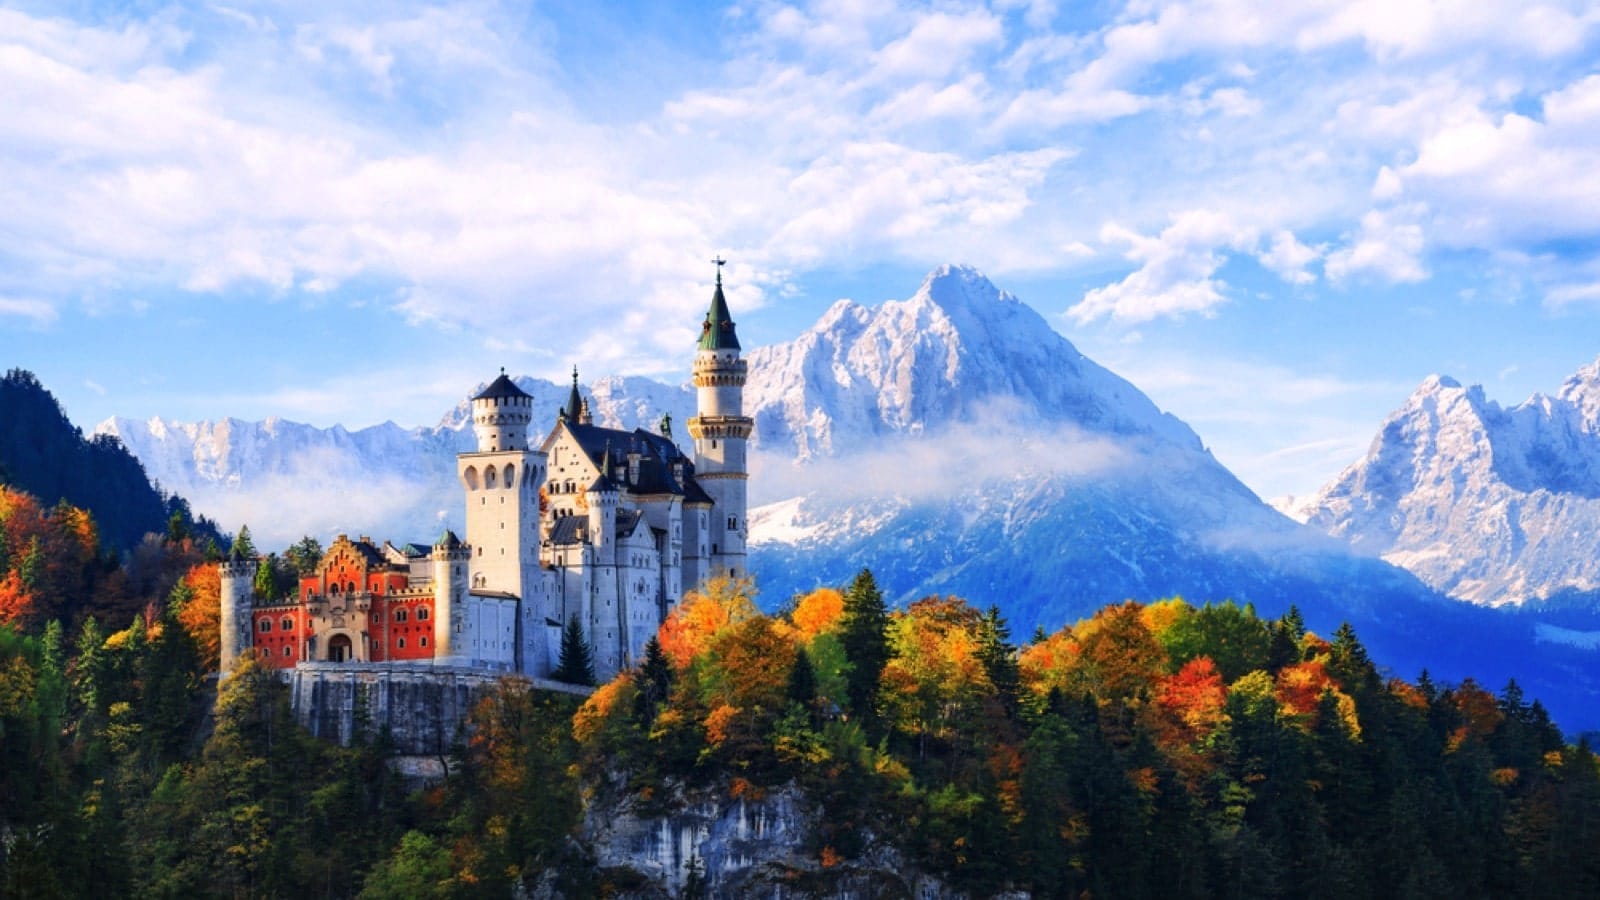 Neuschwanstein Castle In The Bavarian Alps Germany